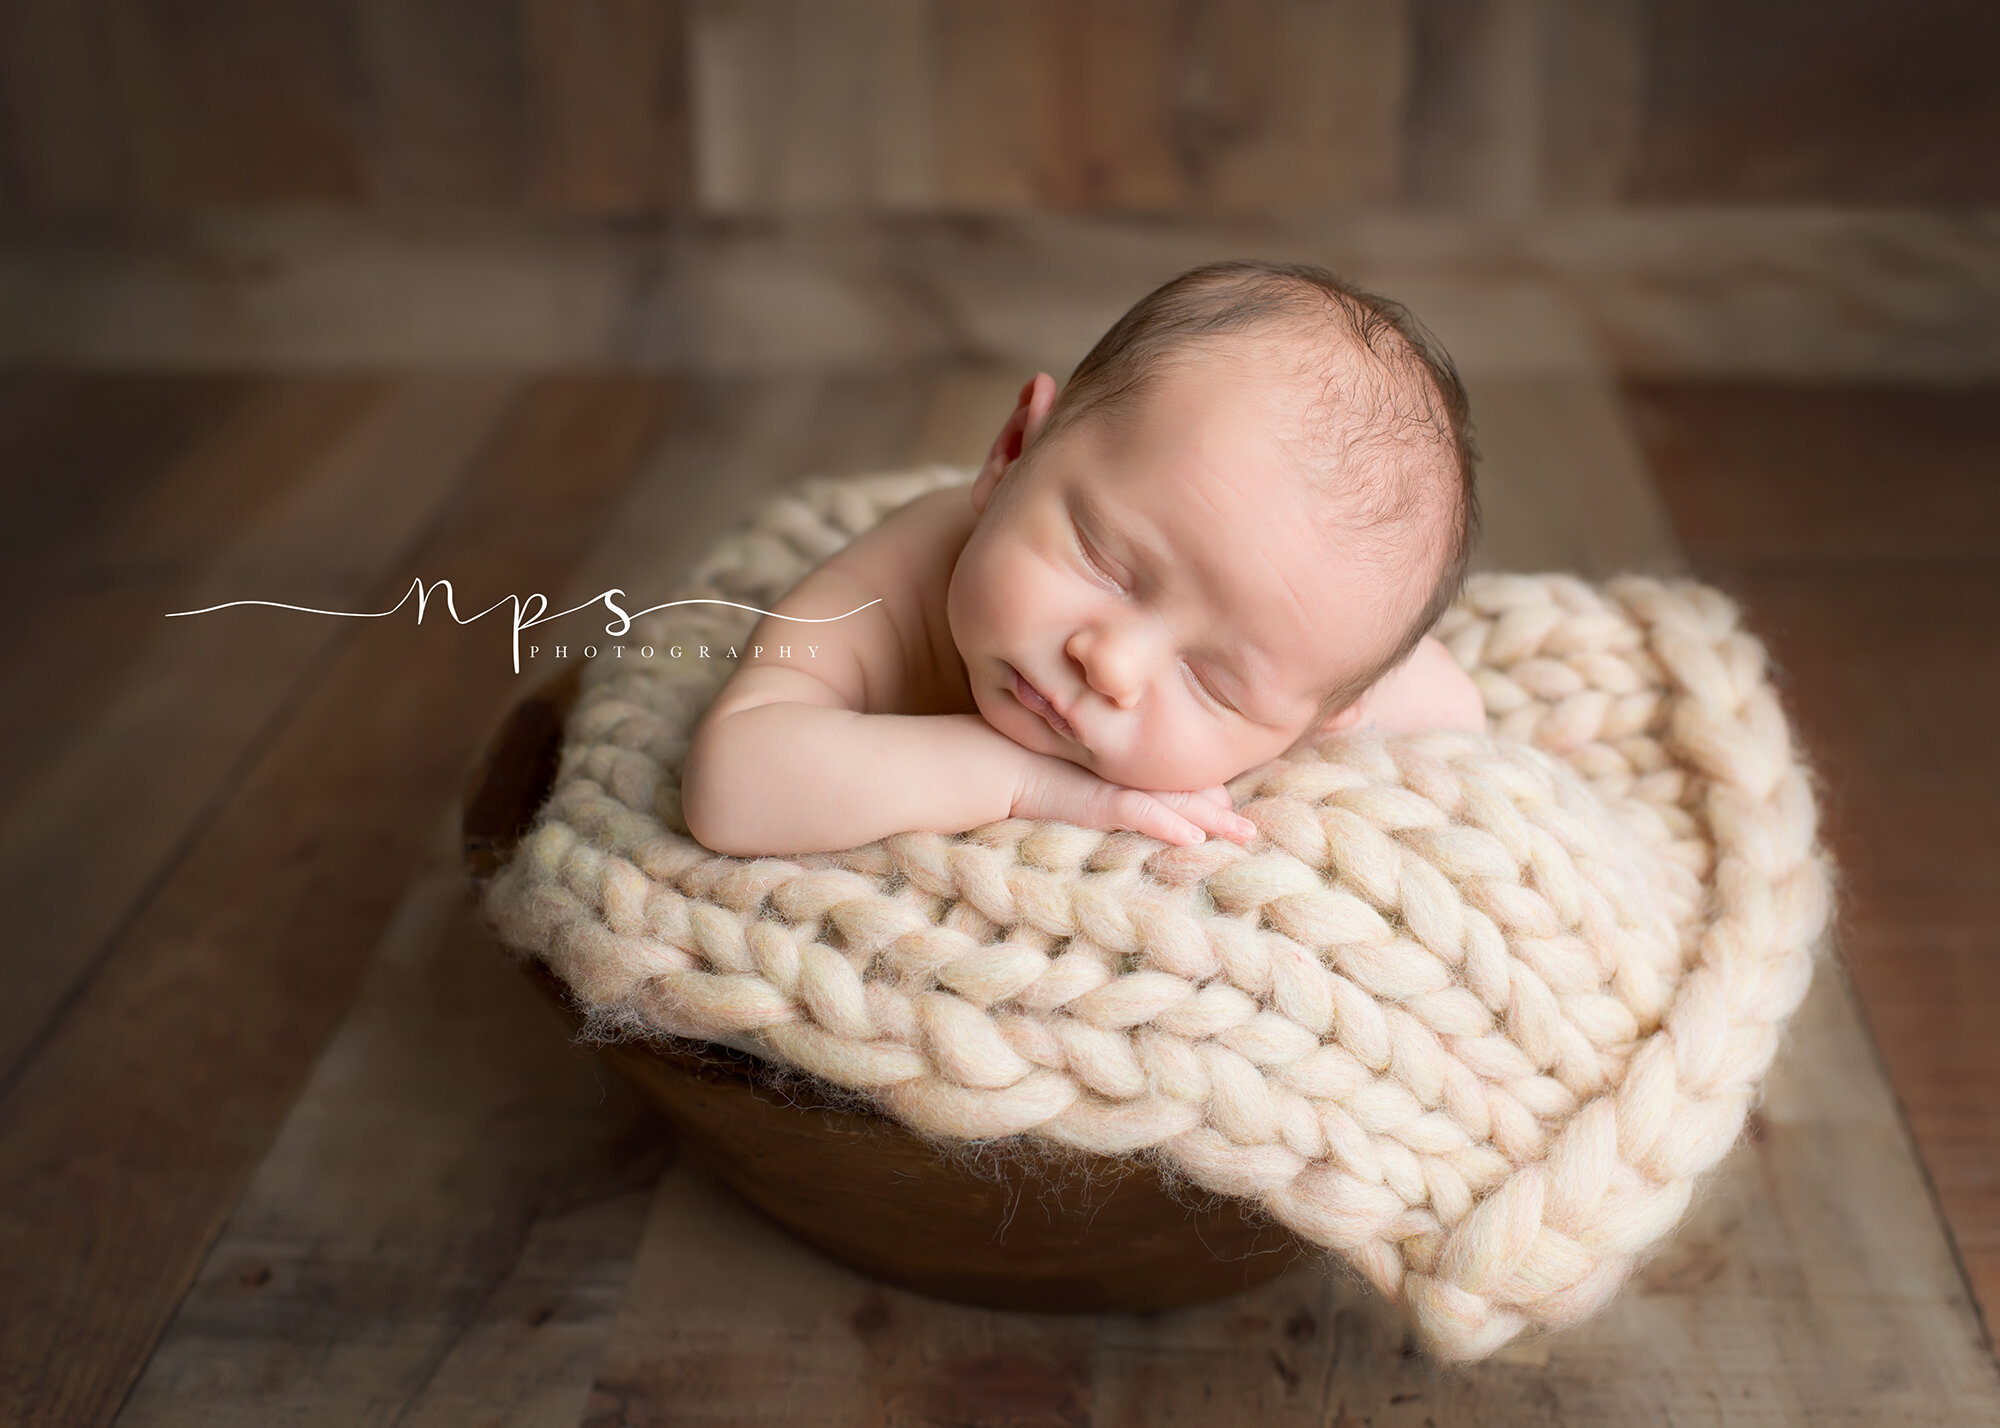 Newborn Photographer Fayetteville - NPS Photography